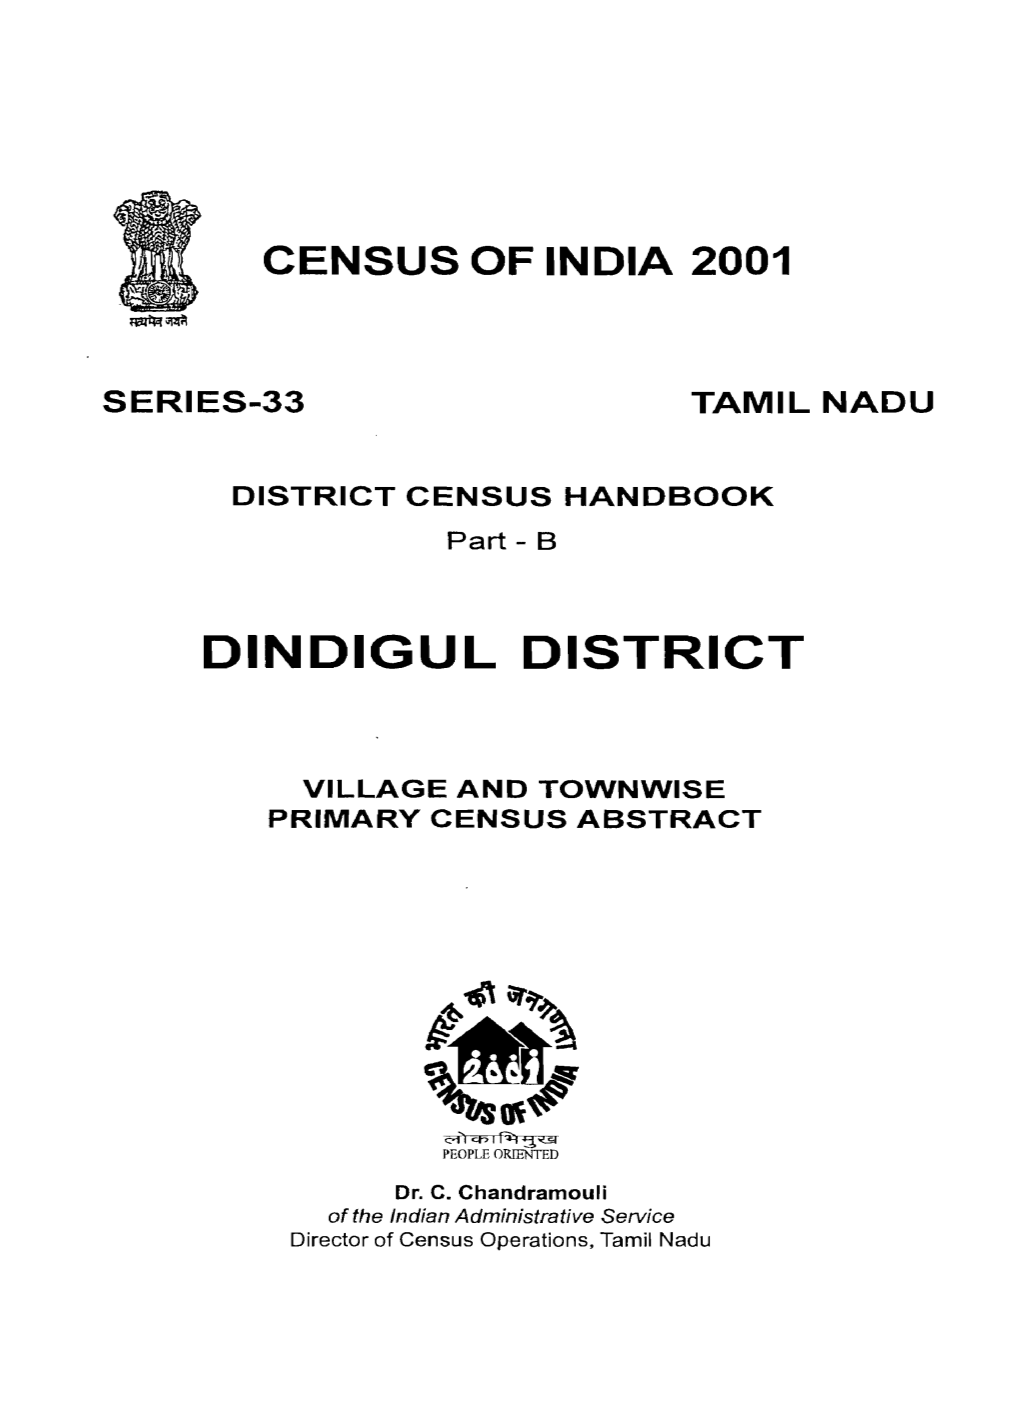 District Census Handbook, Dindigul, Part XII-B, Series-33